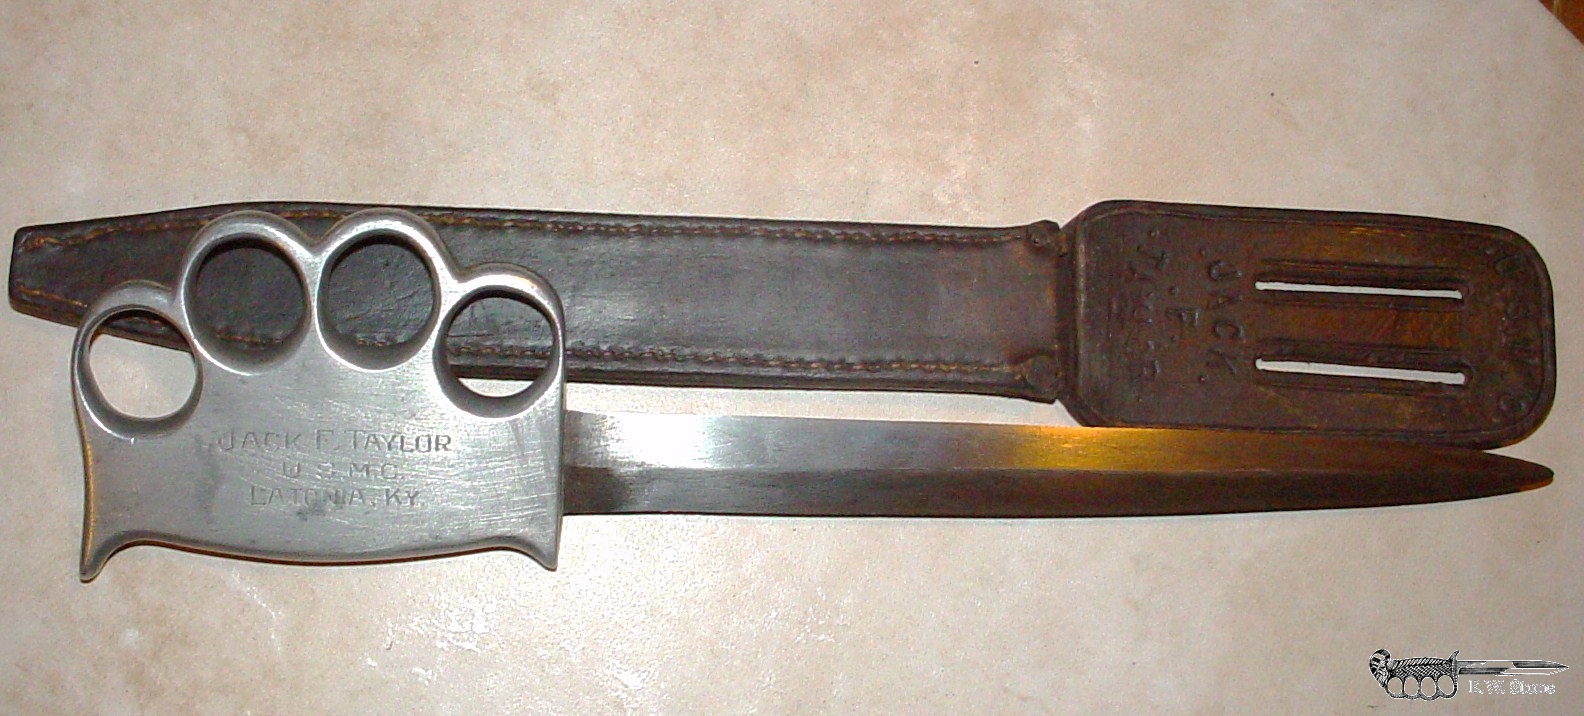 Unknown USMC Knuckle Knife